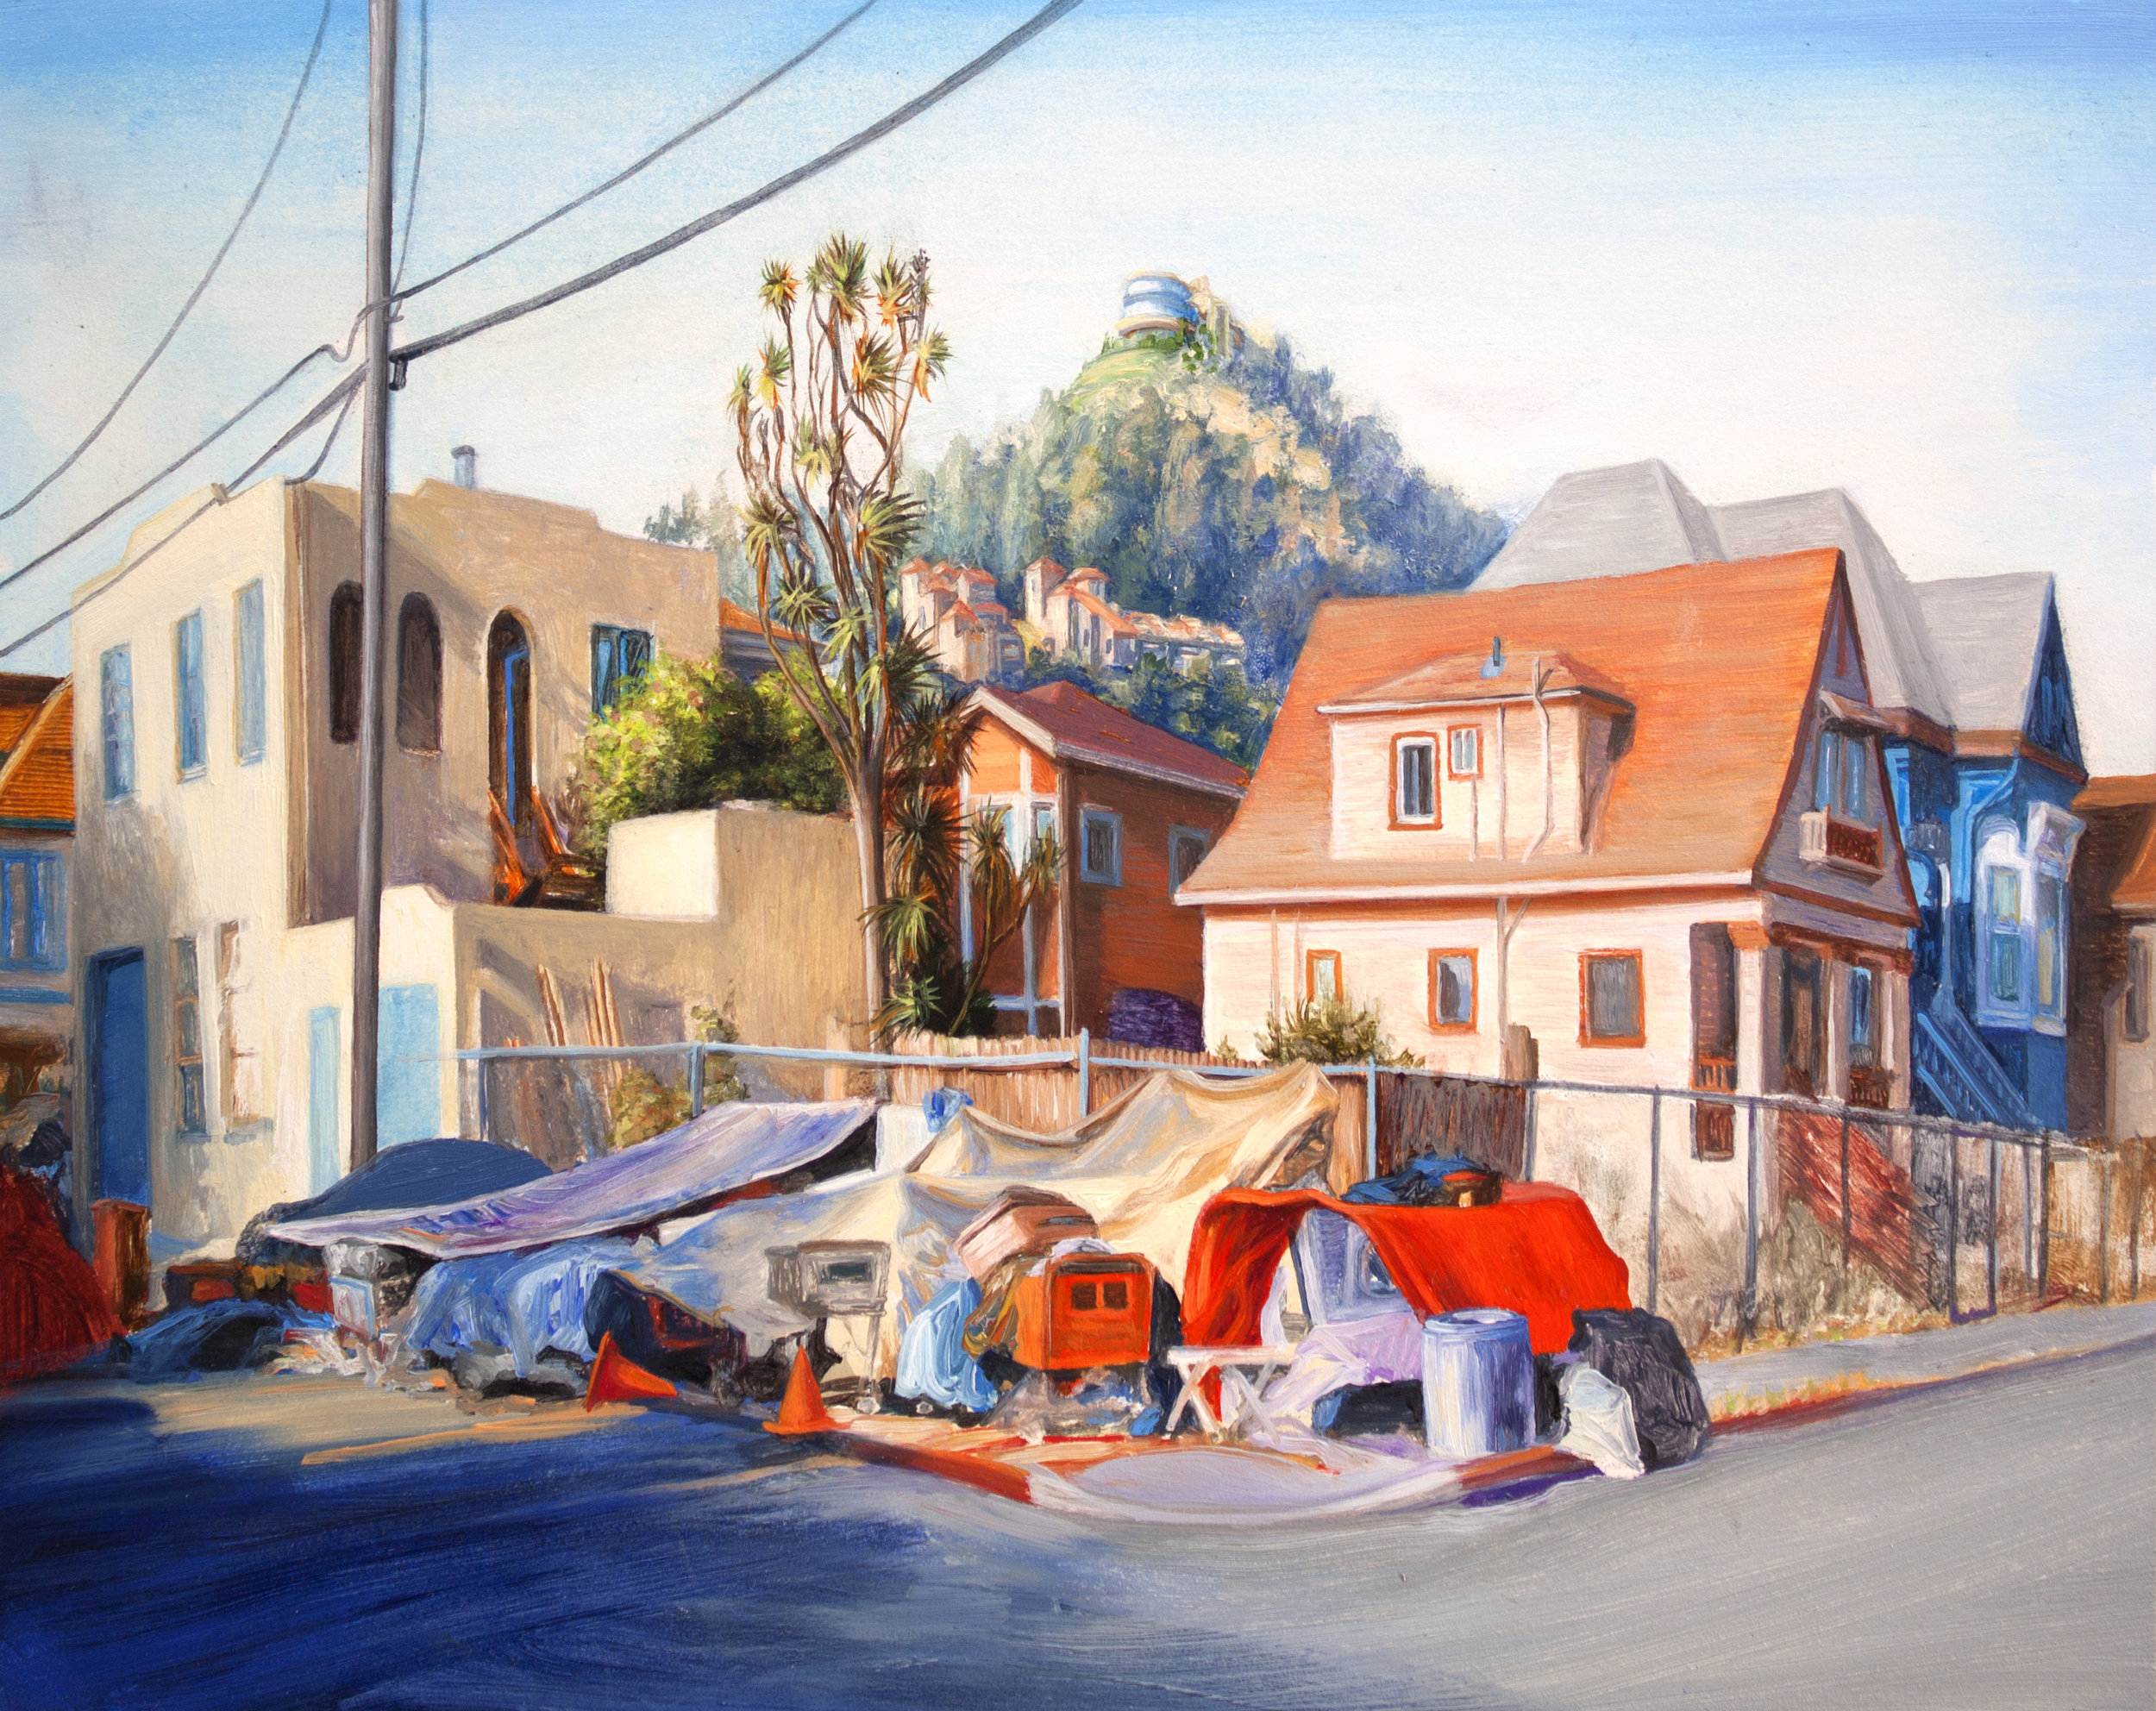  Oakland Landscape Study #1  8" x 10"  Oil on Panel  2016 